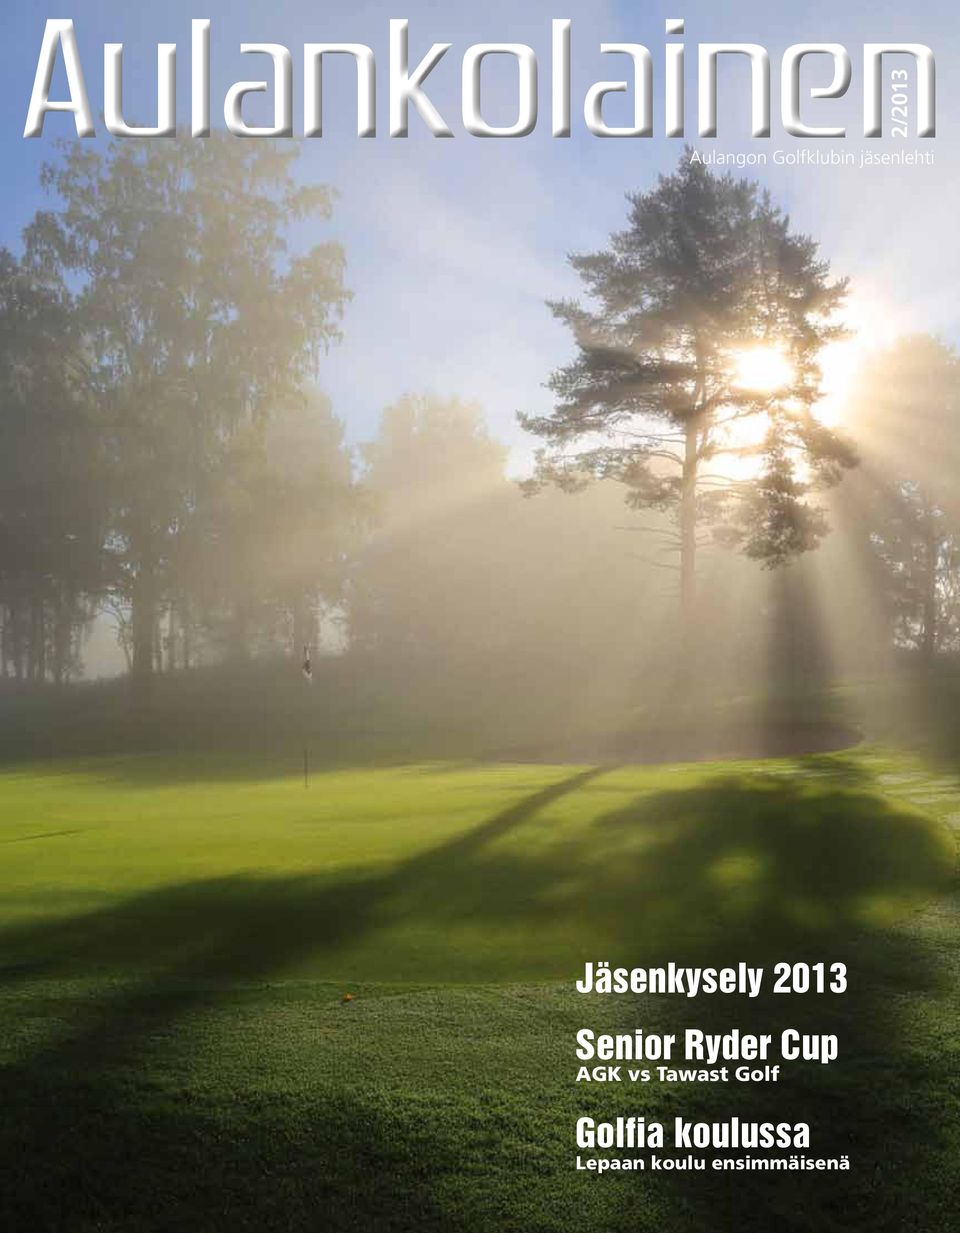 Senior Ryder Cup AGK vs Tawast Golf